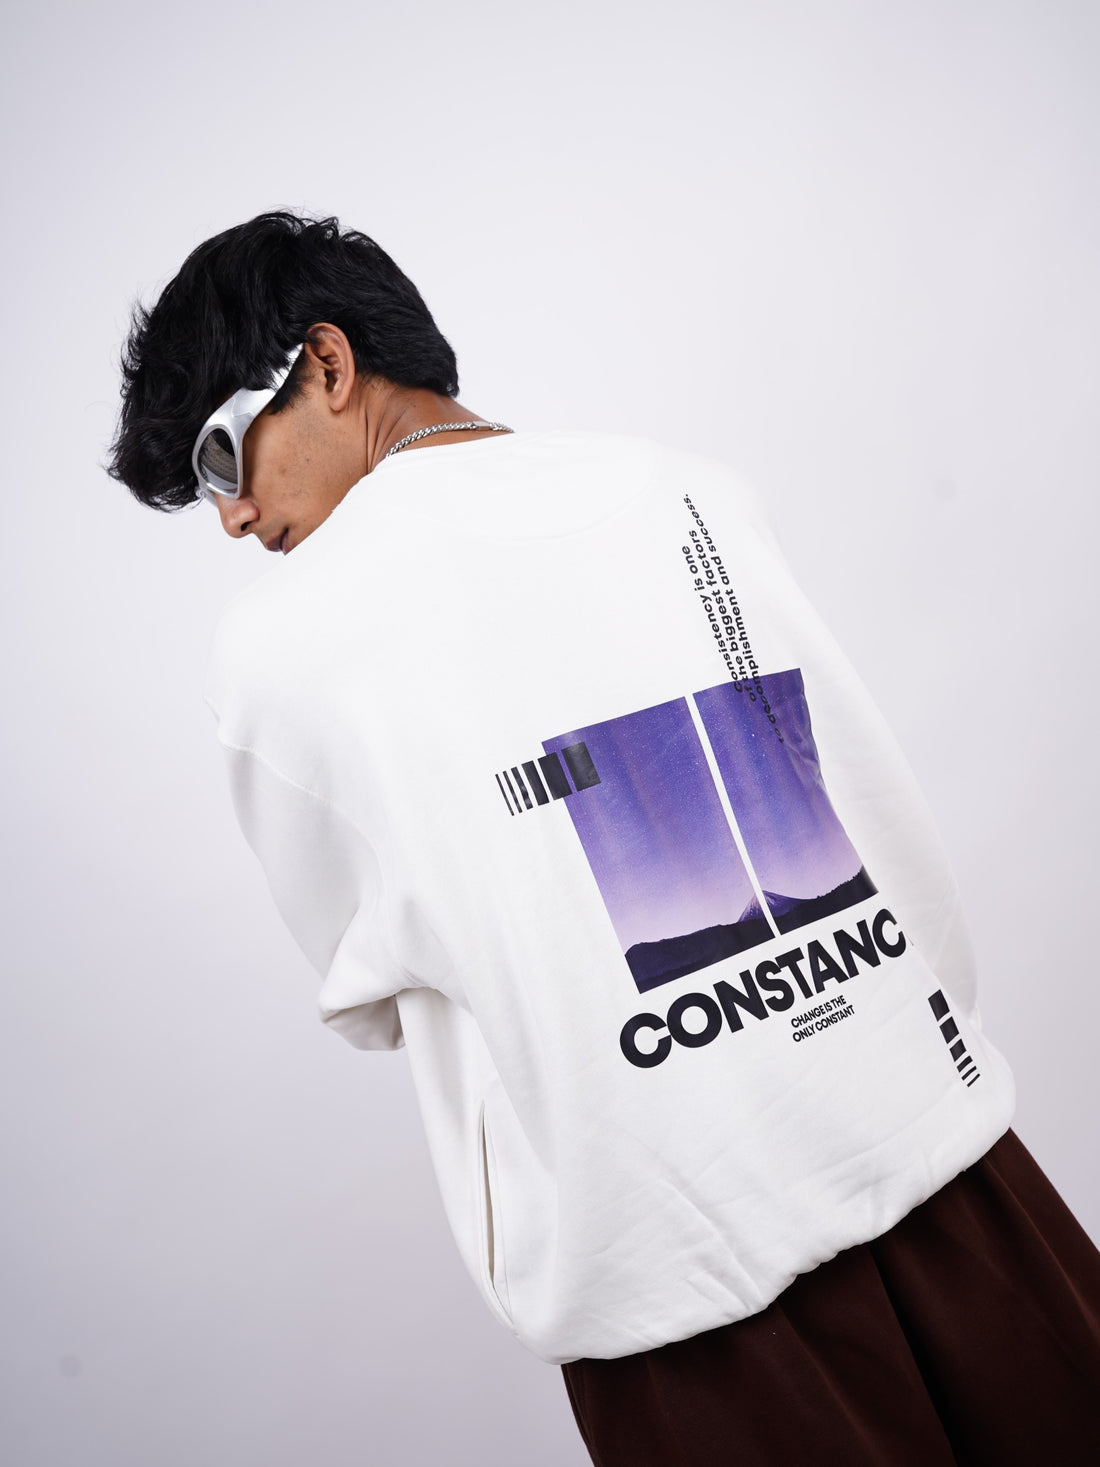 Constancy - Heavyweight Baggy Unisex Sweatshirt